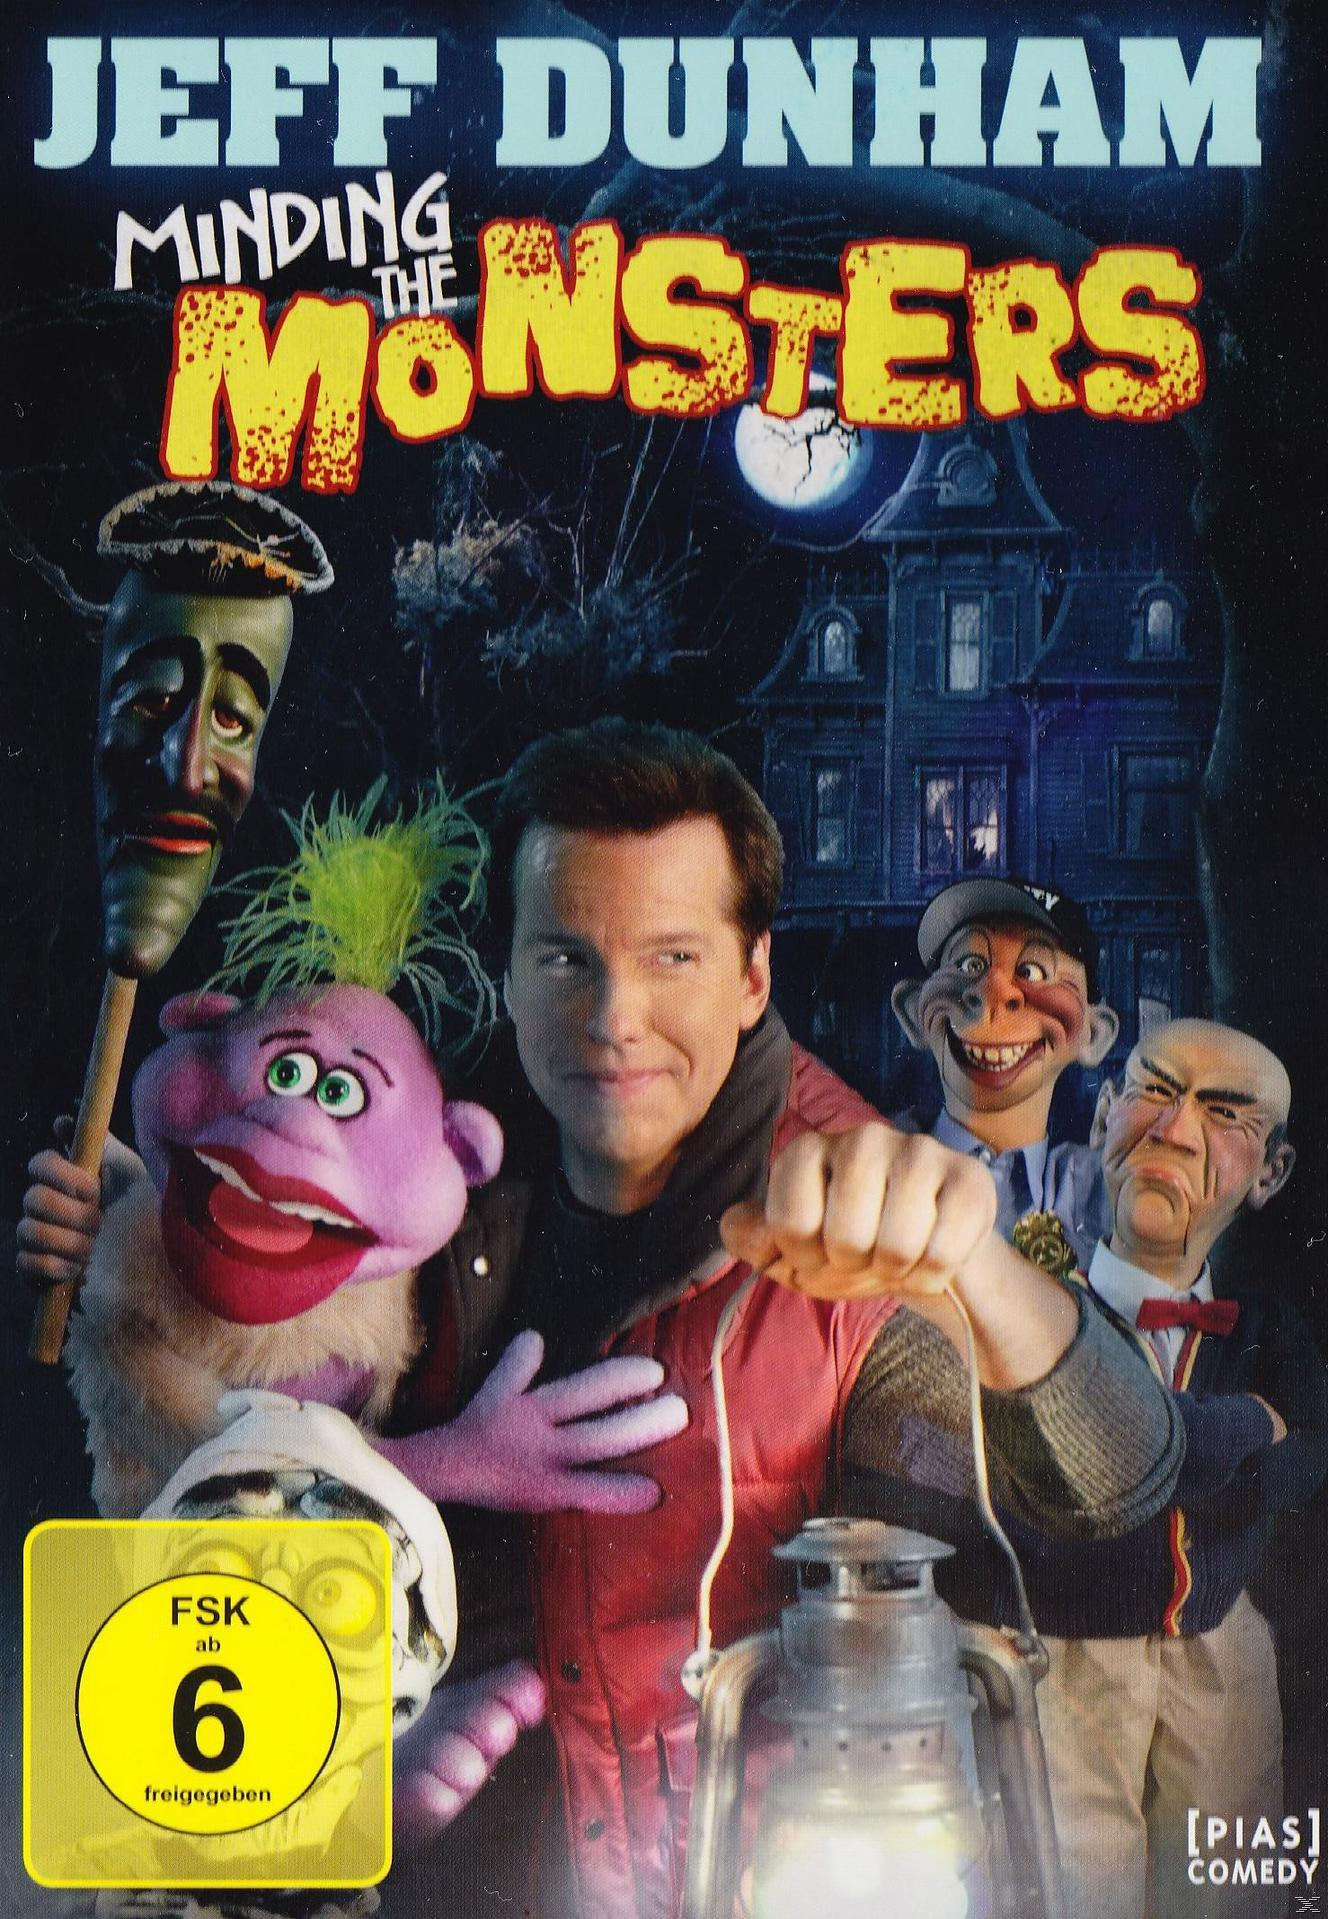 Jeff Dunham - the Minding Monsters DVD